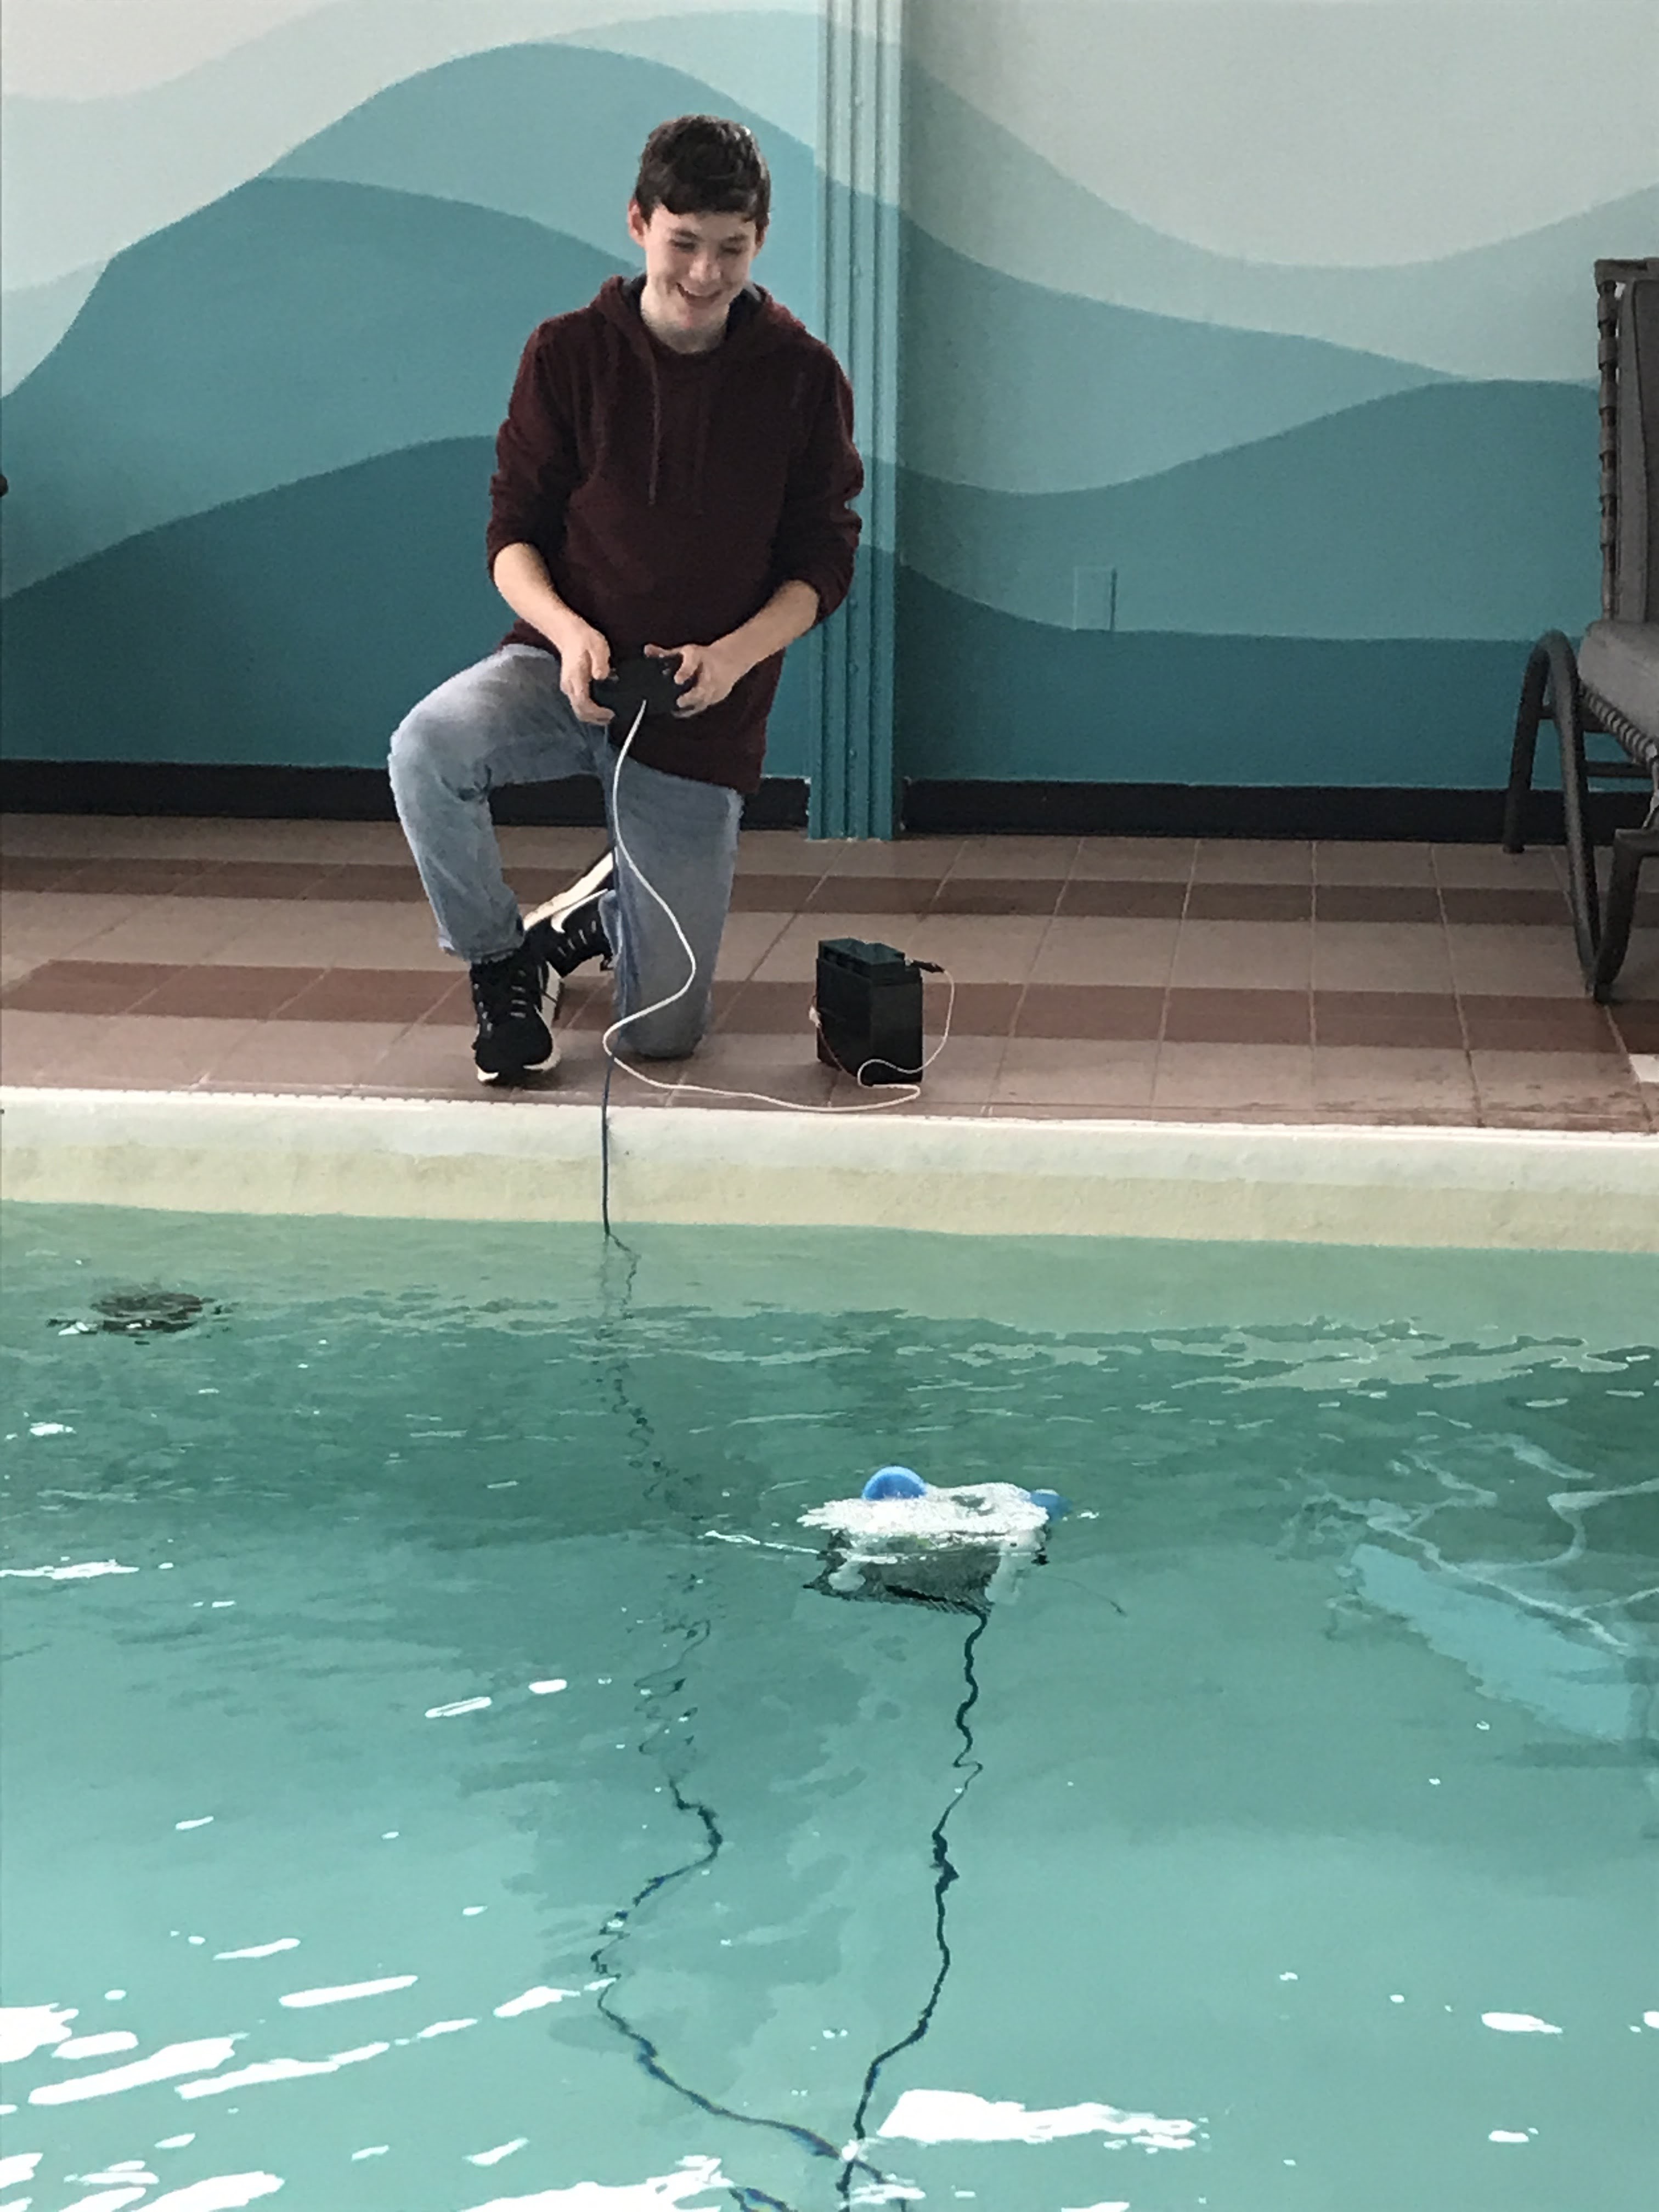 Testing an ROV